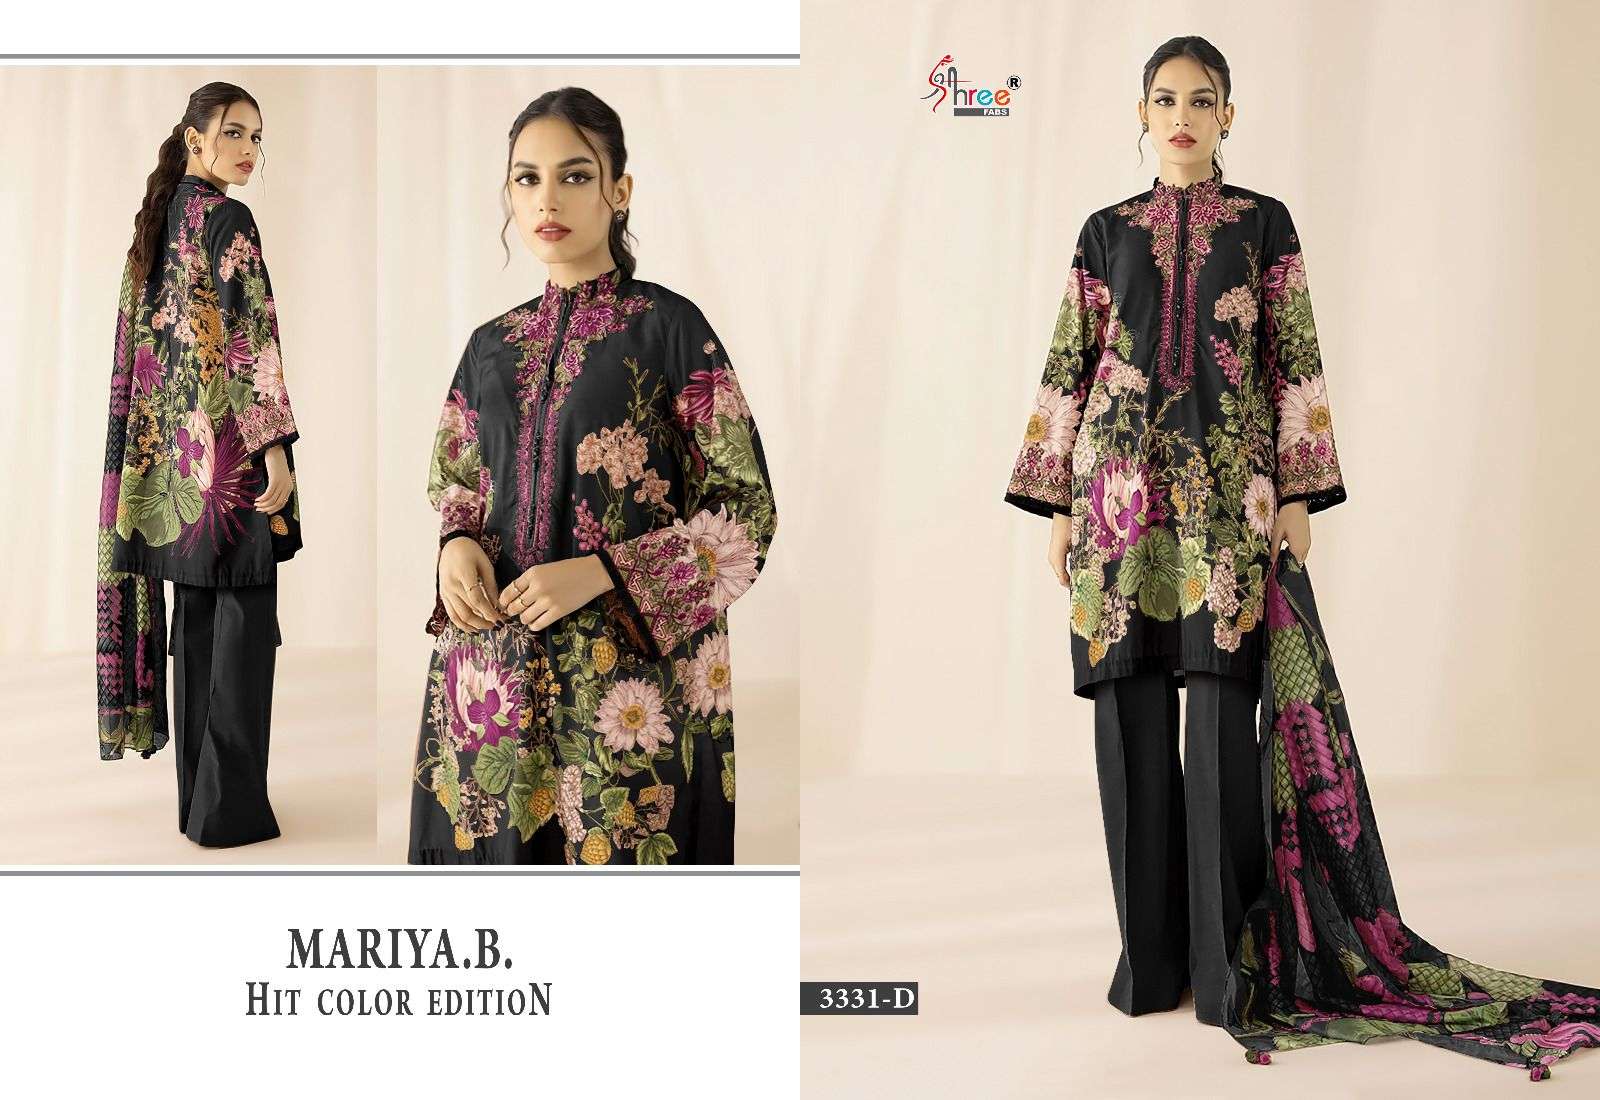 shree fabs maria b 3331 colour series designer festive wear pakistani suit wholesaler surat gujarat